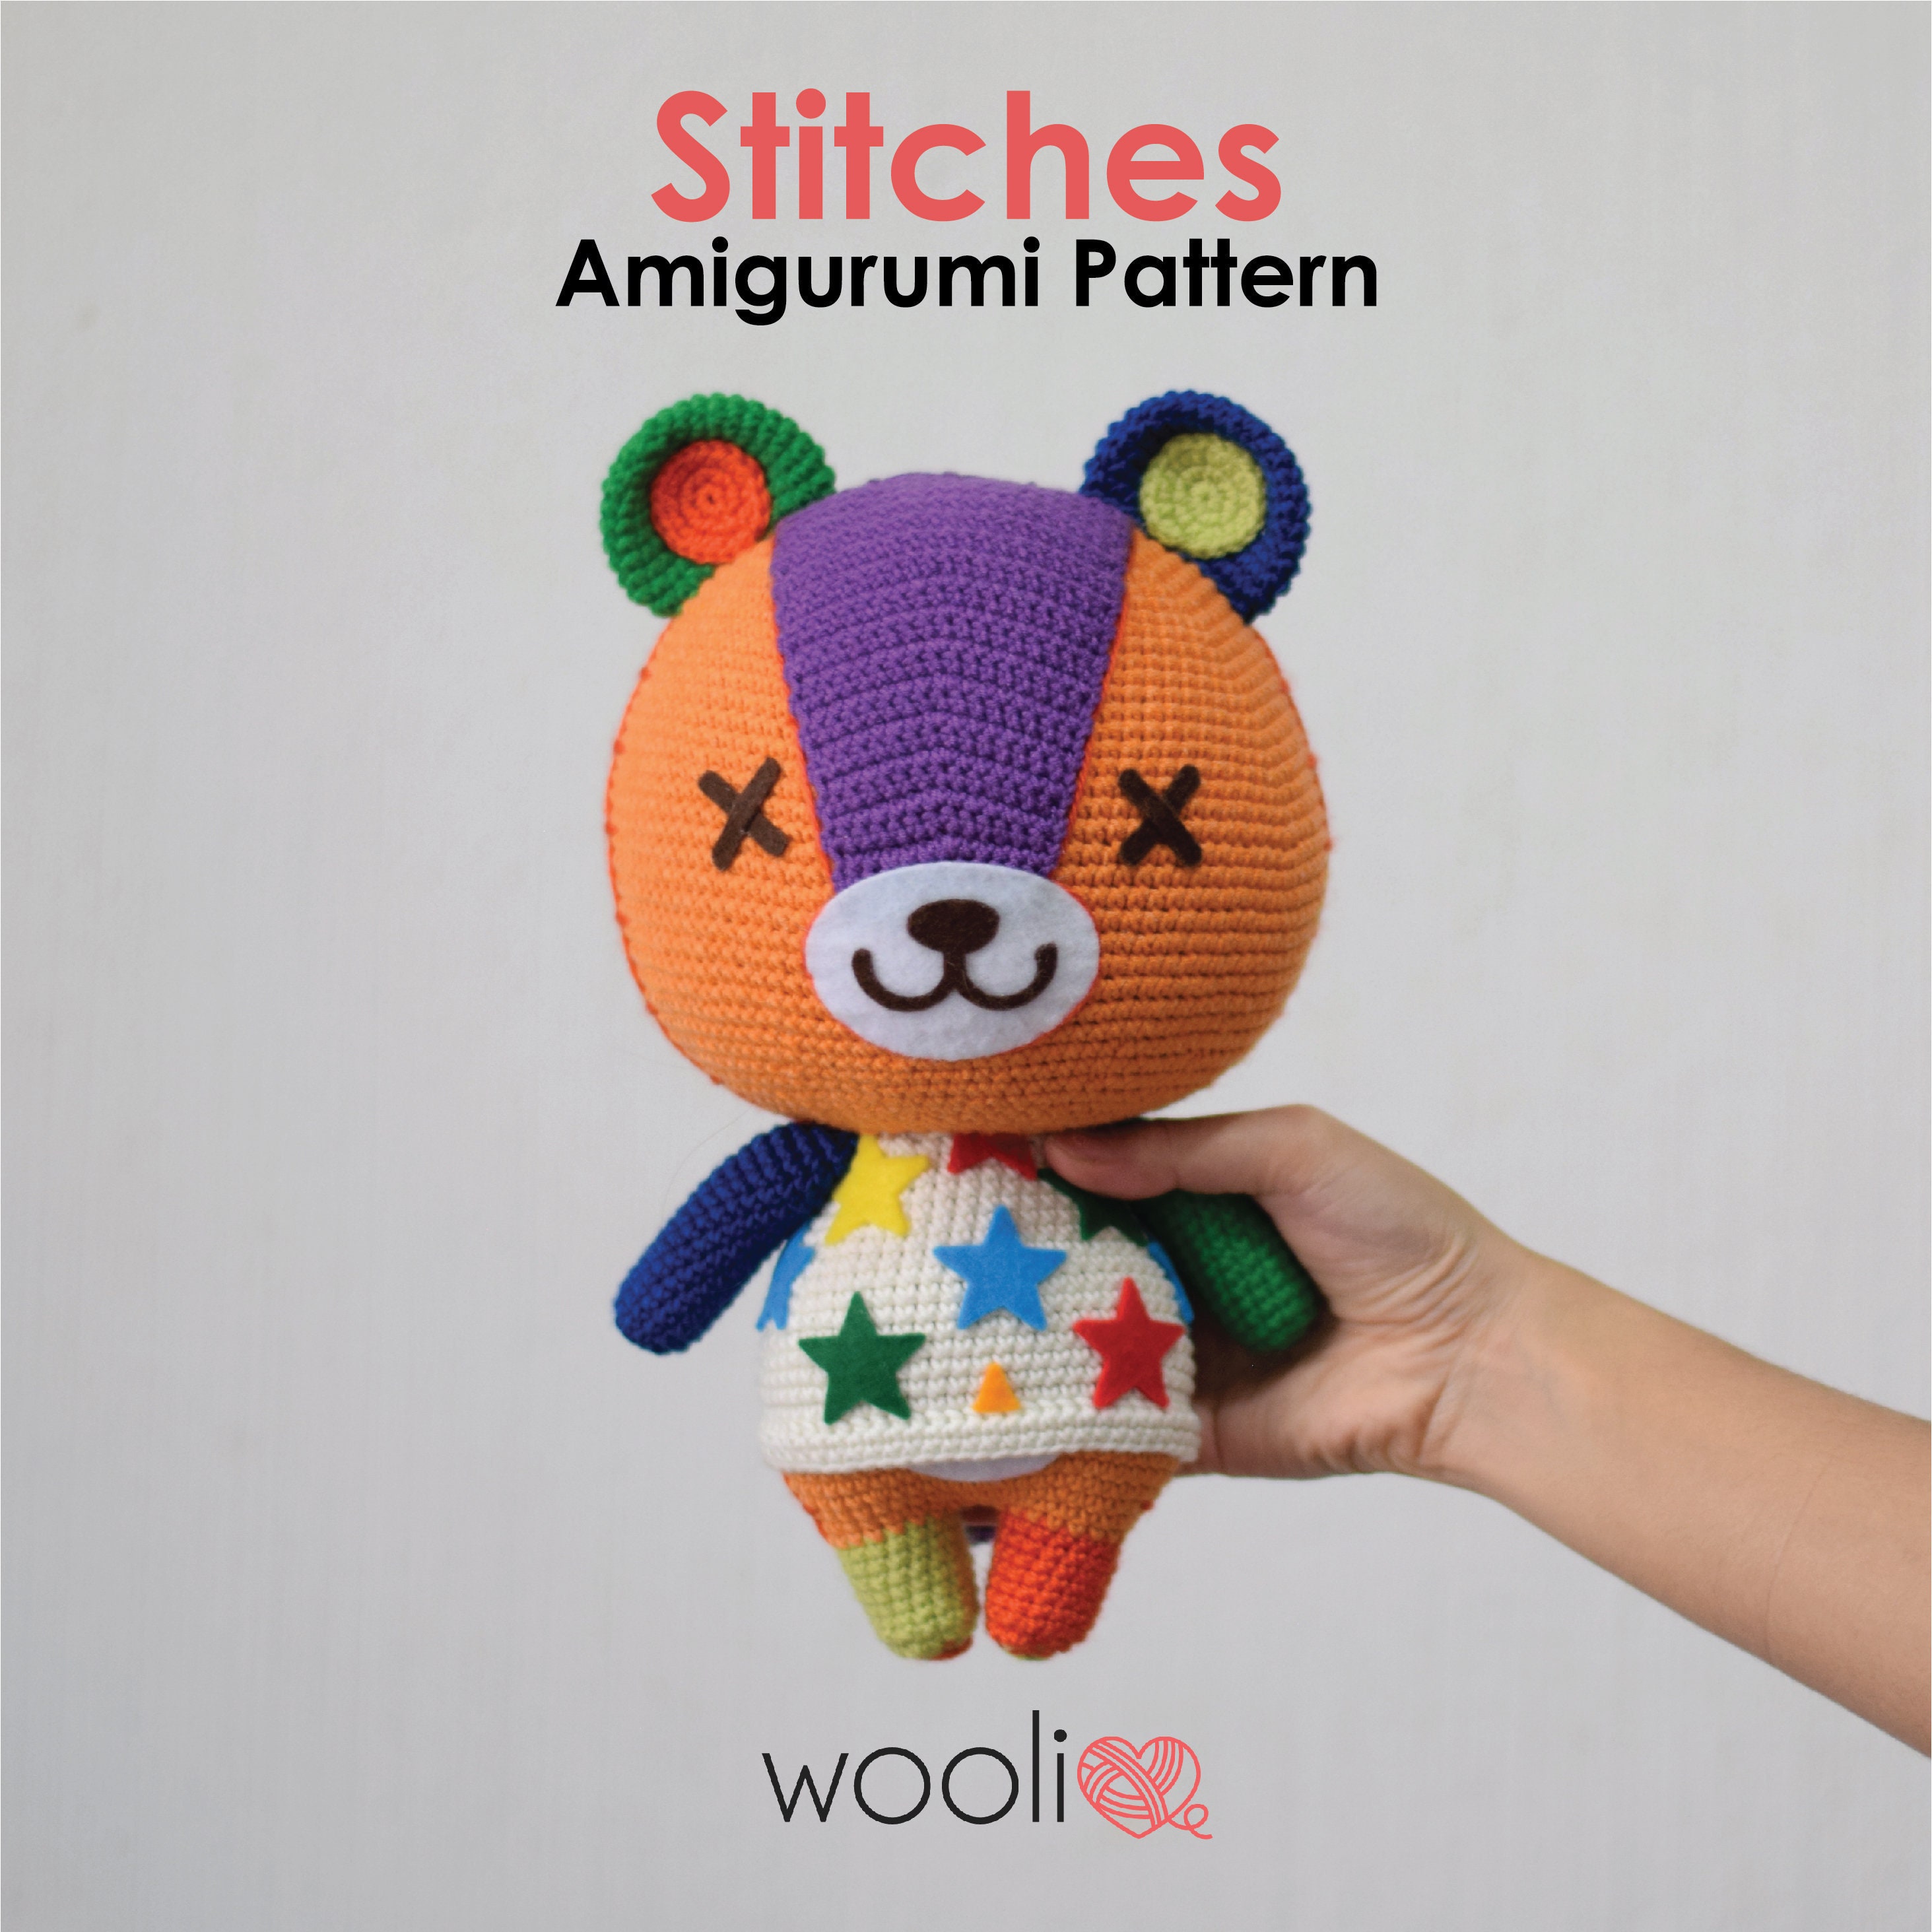 How to Read Amigurumi Patterns - Cuddly Stitches Craft